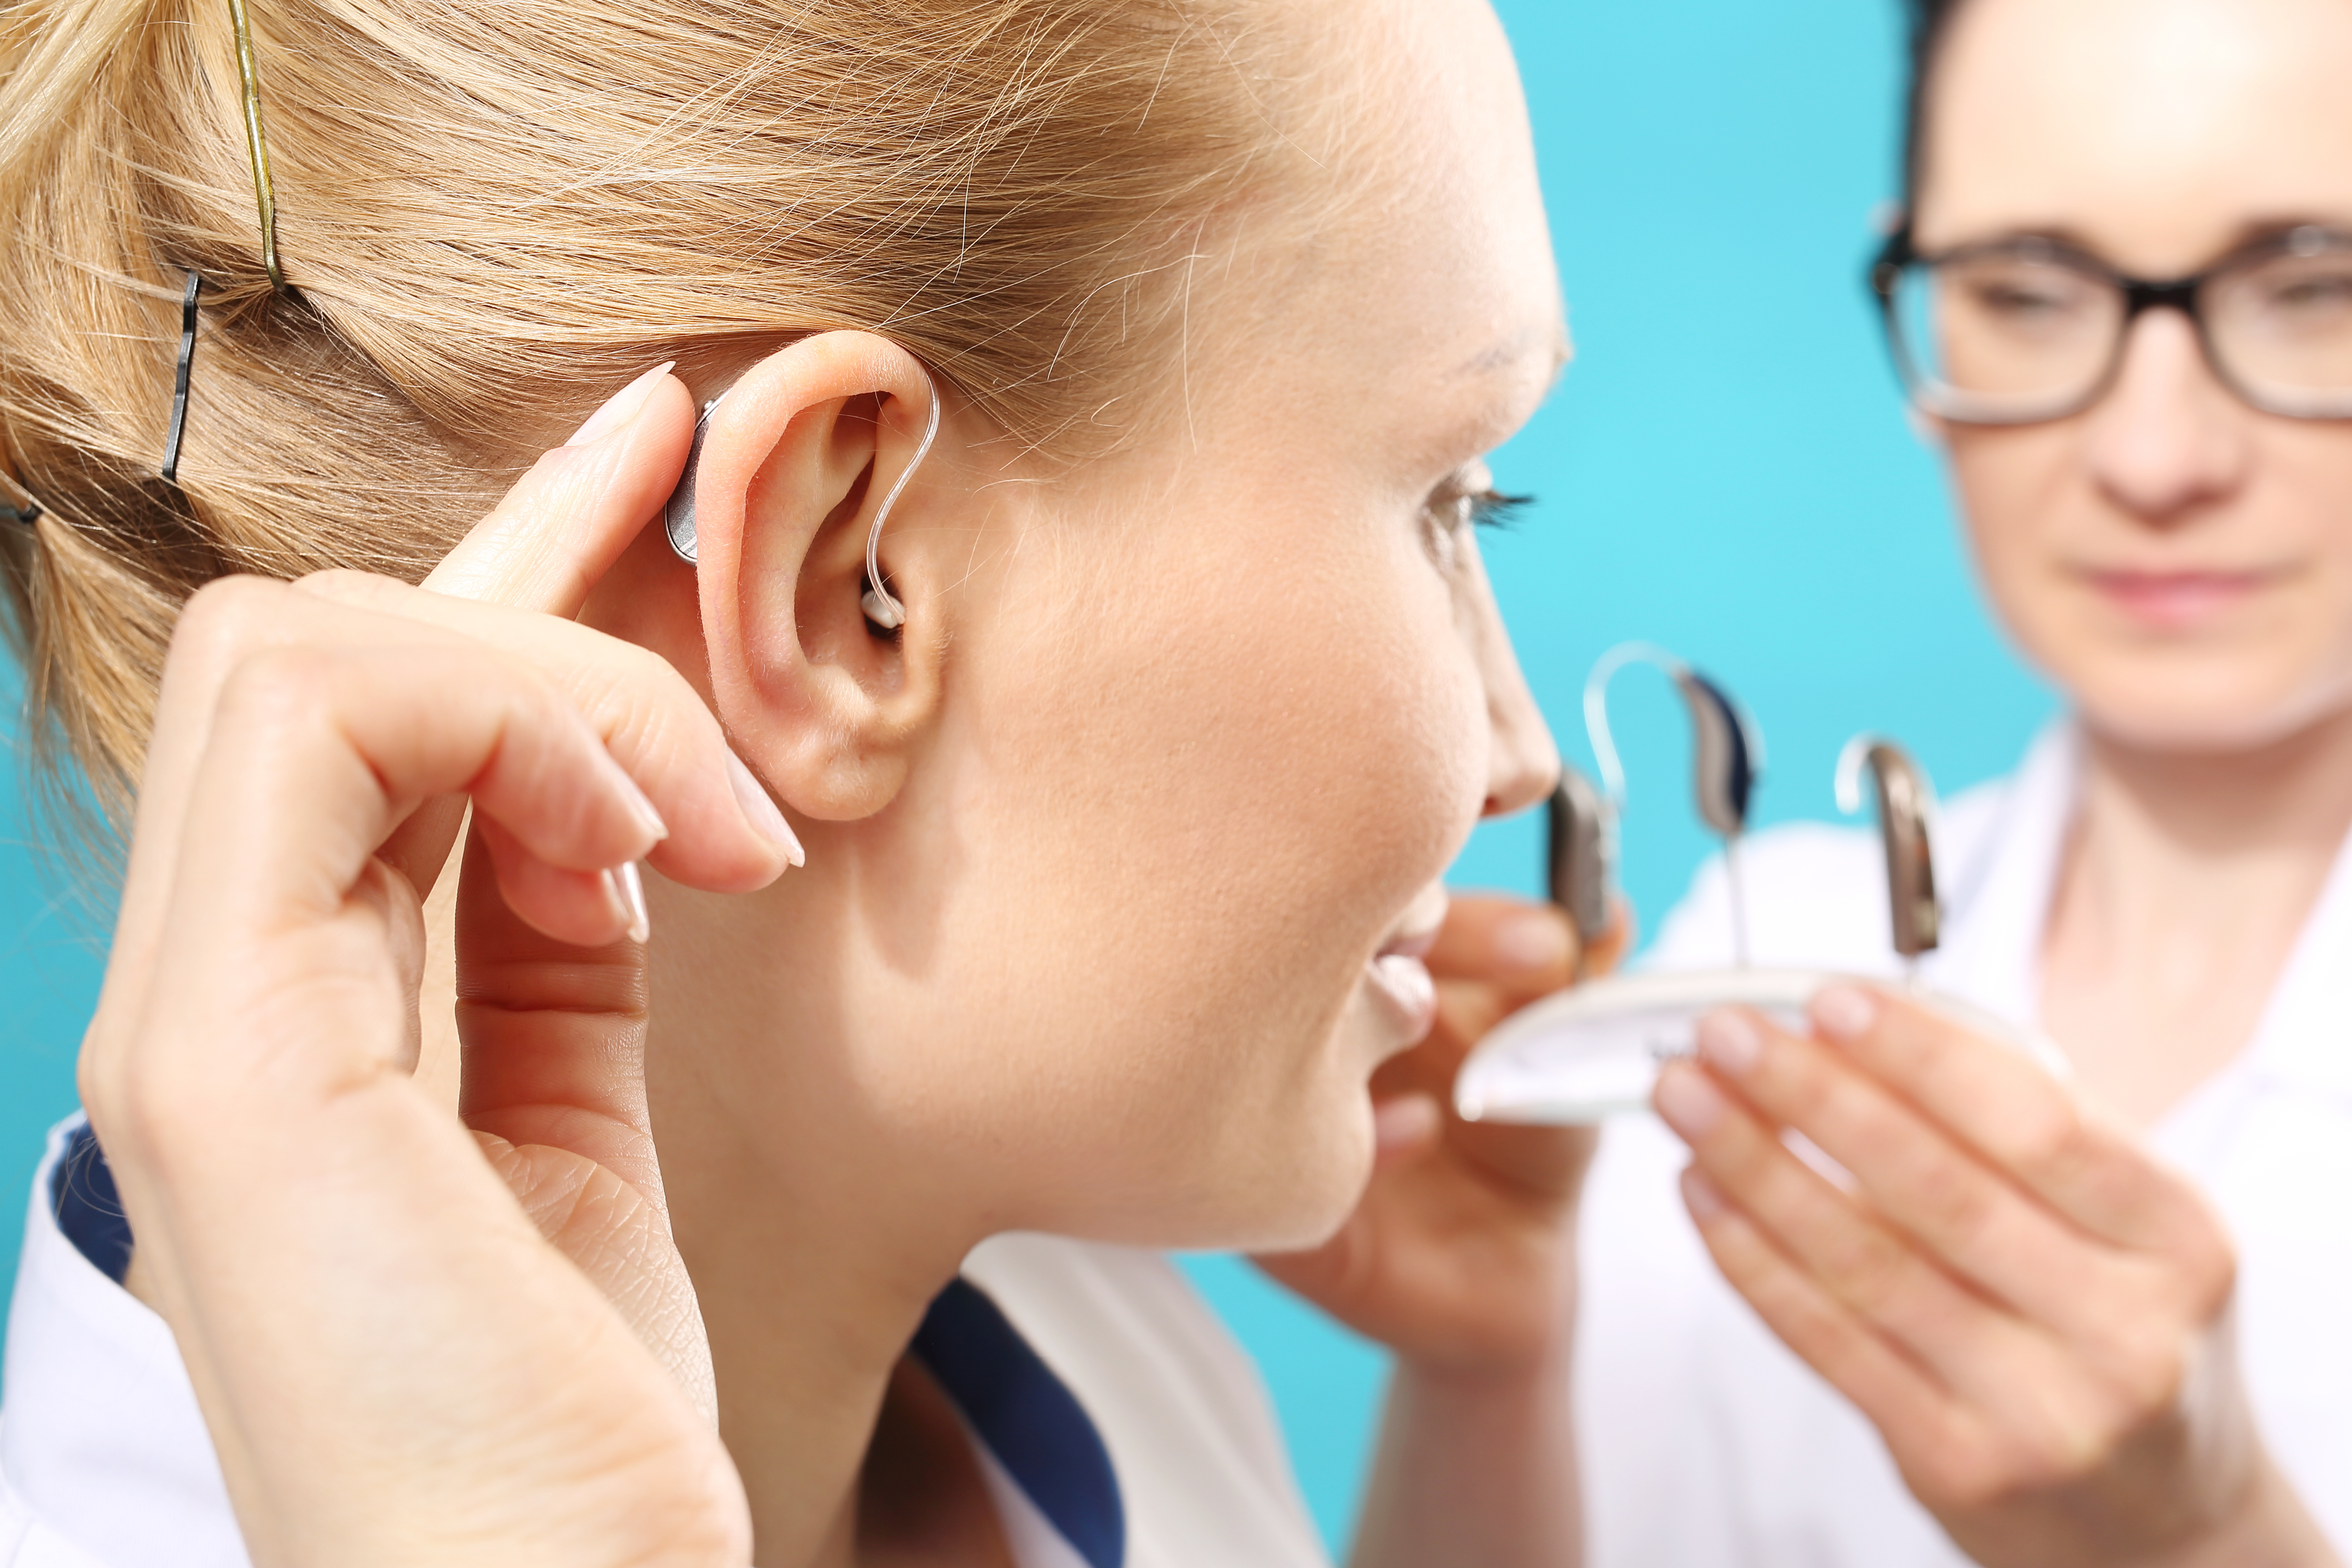 Ear hearing. Слуховой аппарат. Аппарат для слуха. Снижение слуха. Слуховой аппарат человека.